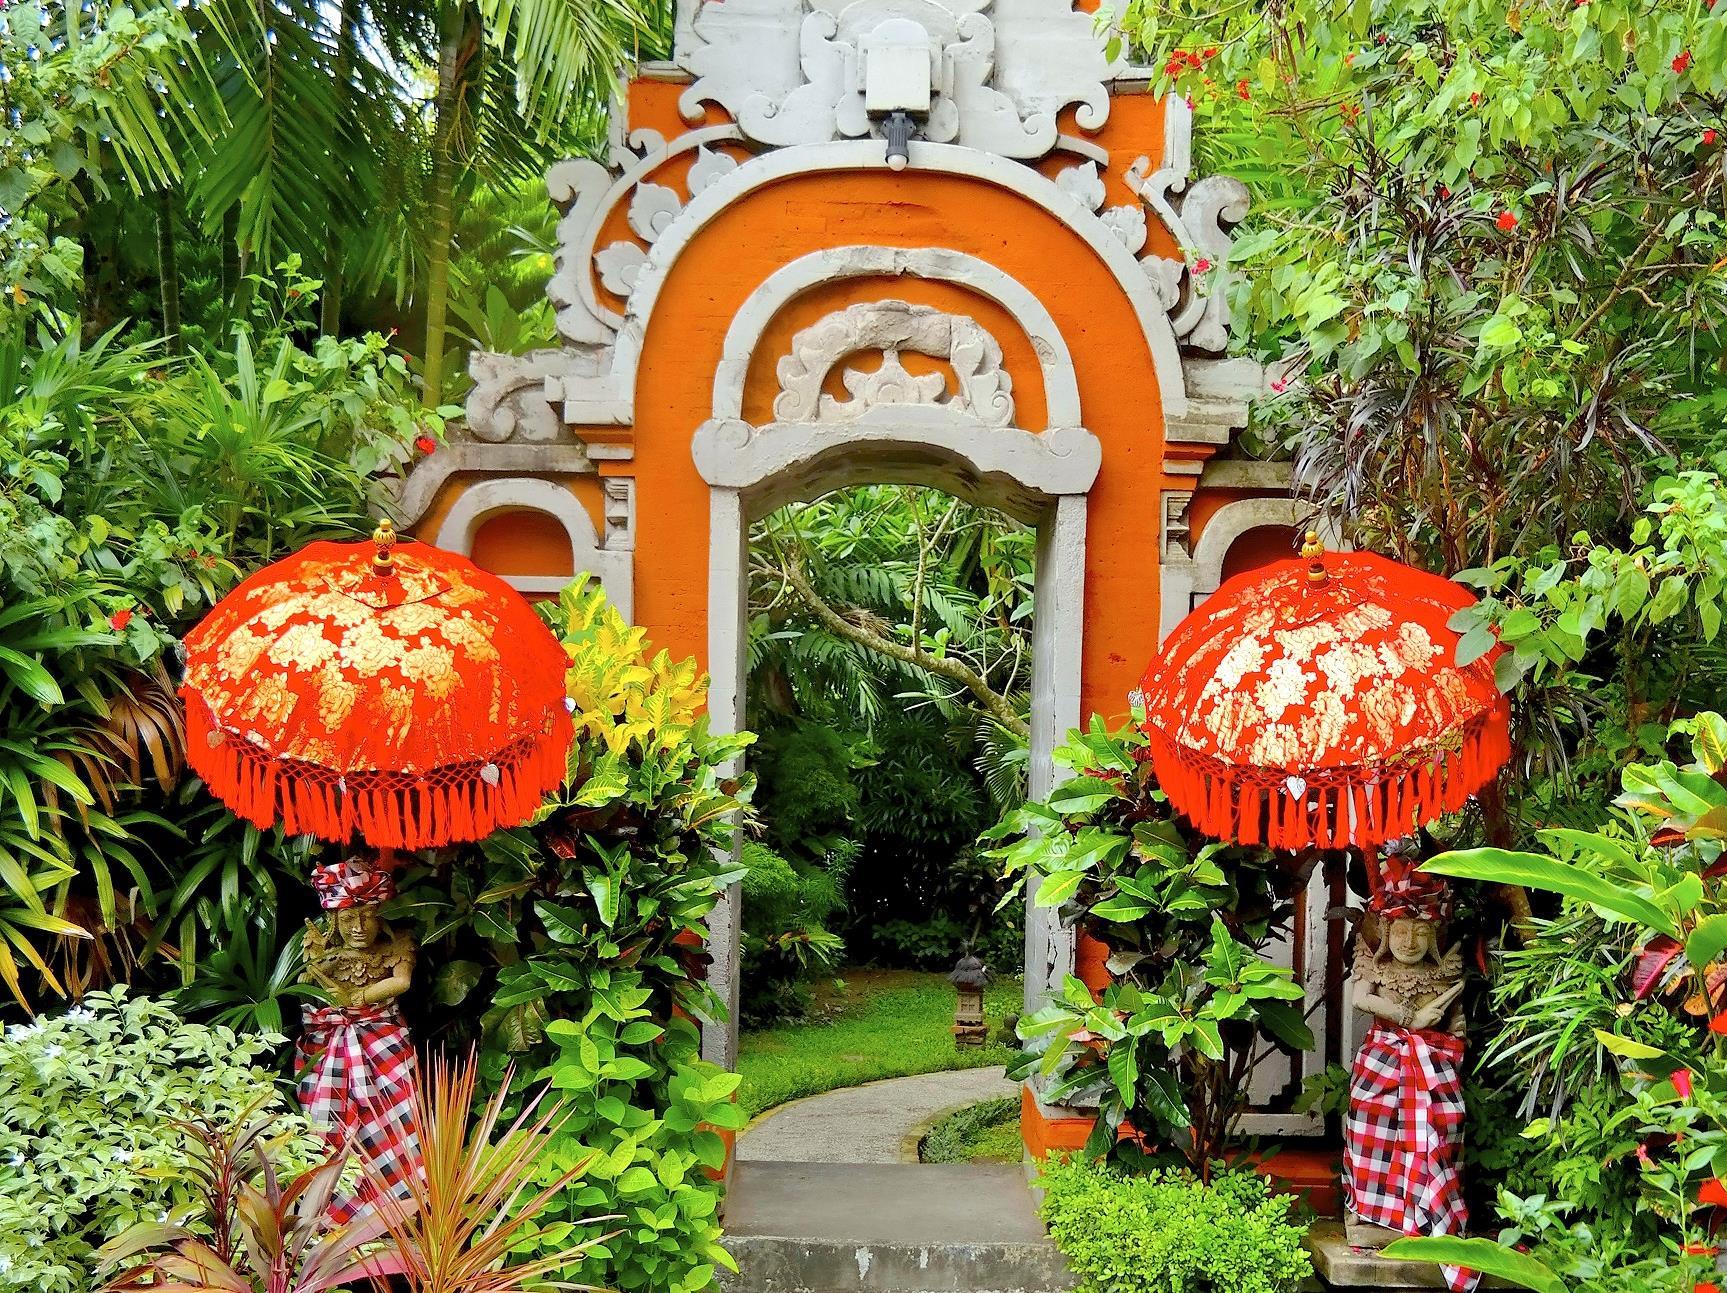 Puri Cendana Resort Bali